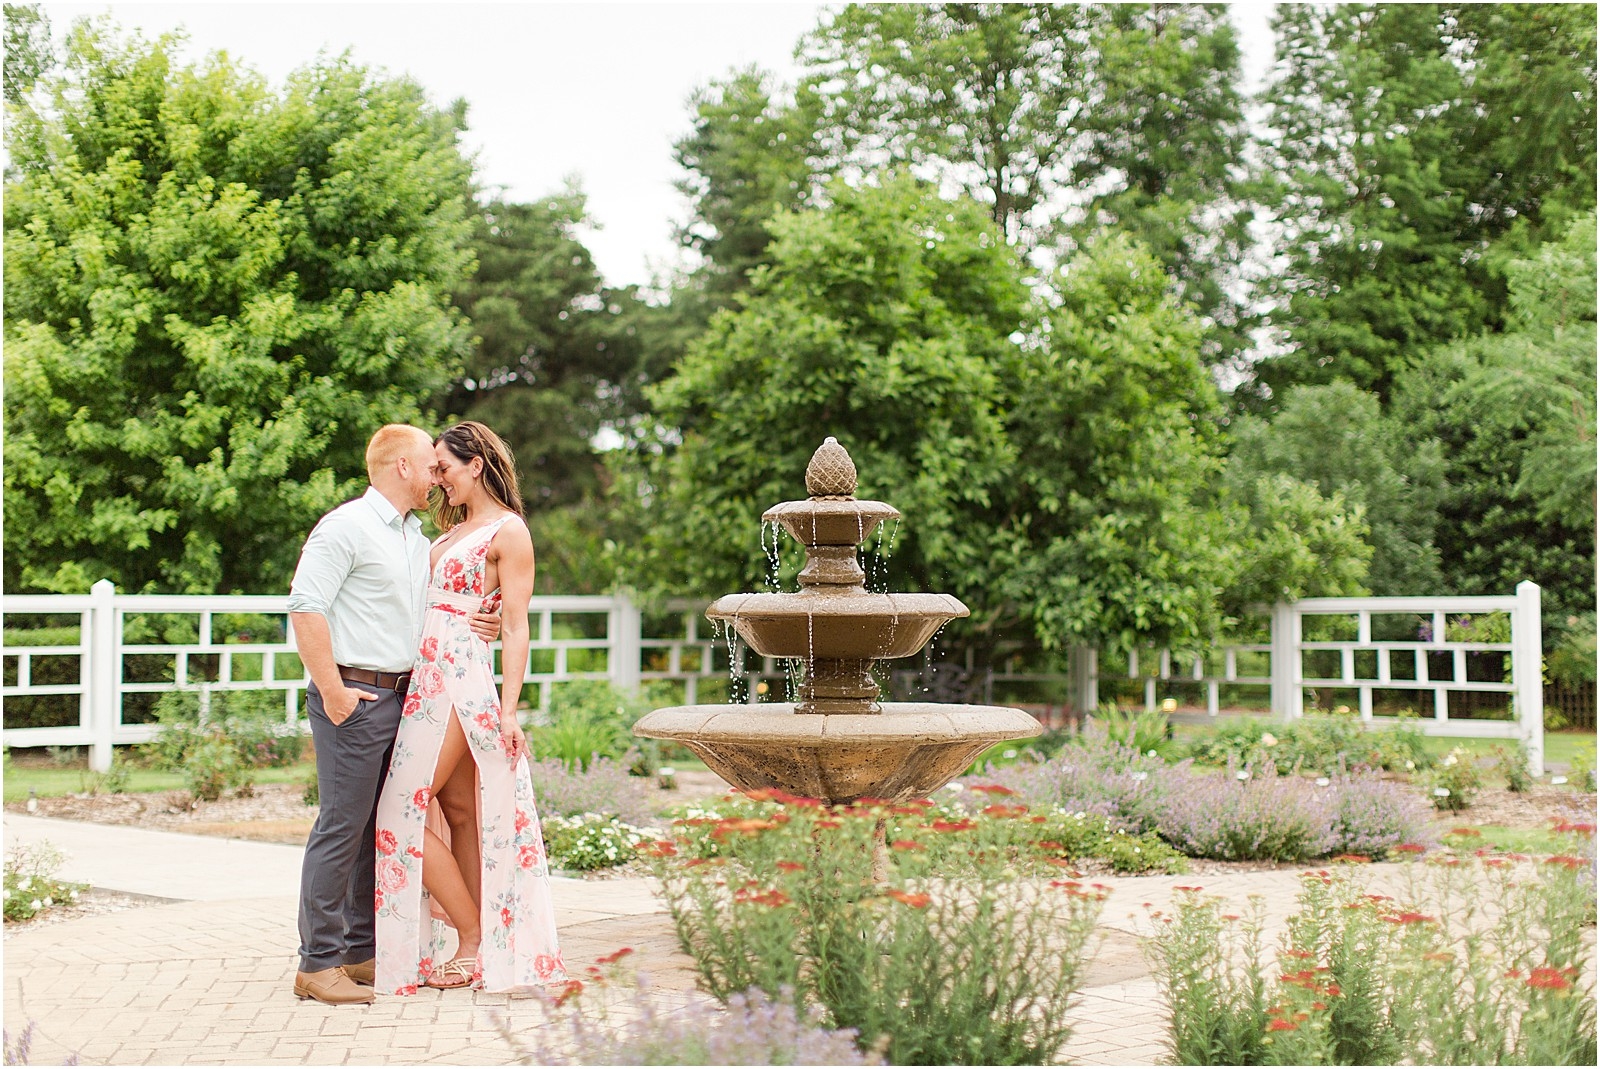 Western Kentuck Botanical Garden | Laura and Ryan | Bret and Branding Wedding Photograpers 001.jpg